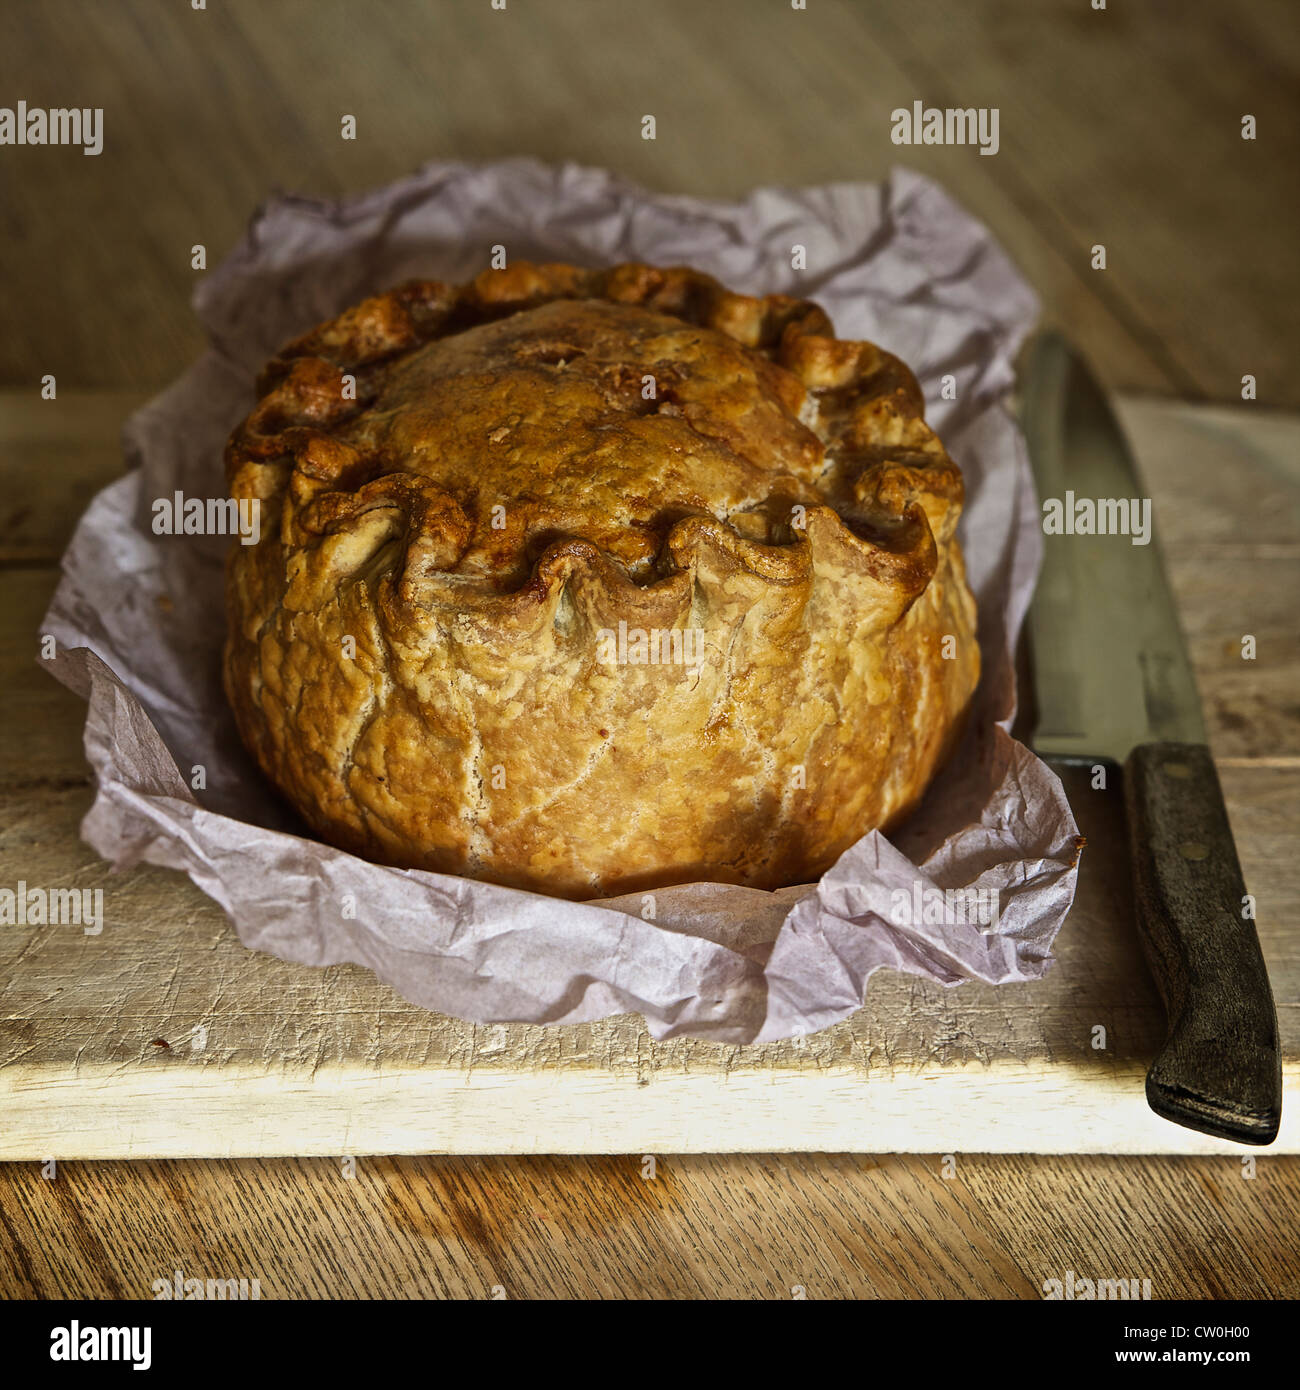 Baked pork pie on wooden board Stock Photo